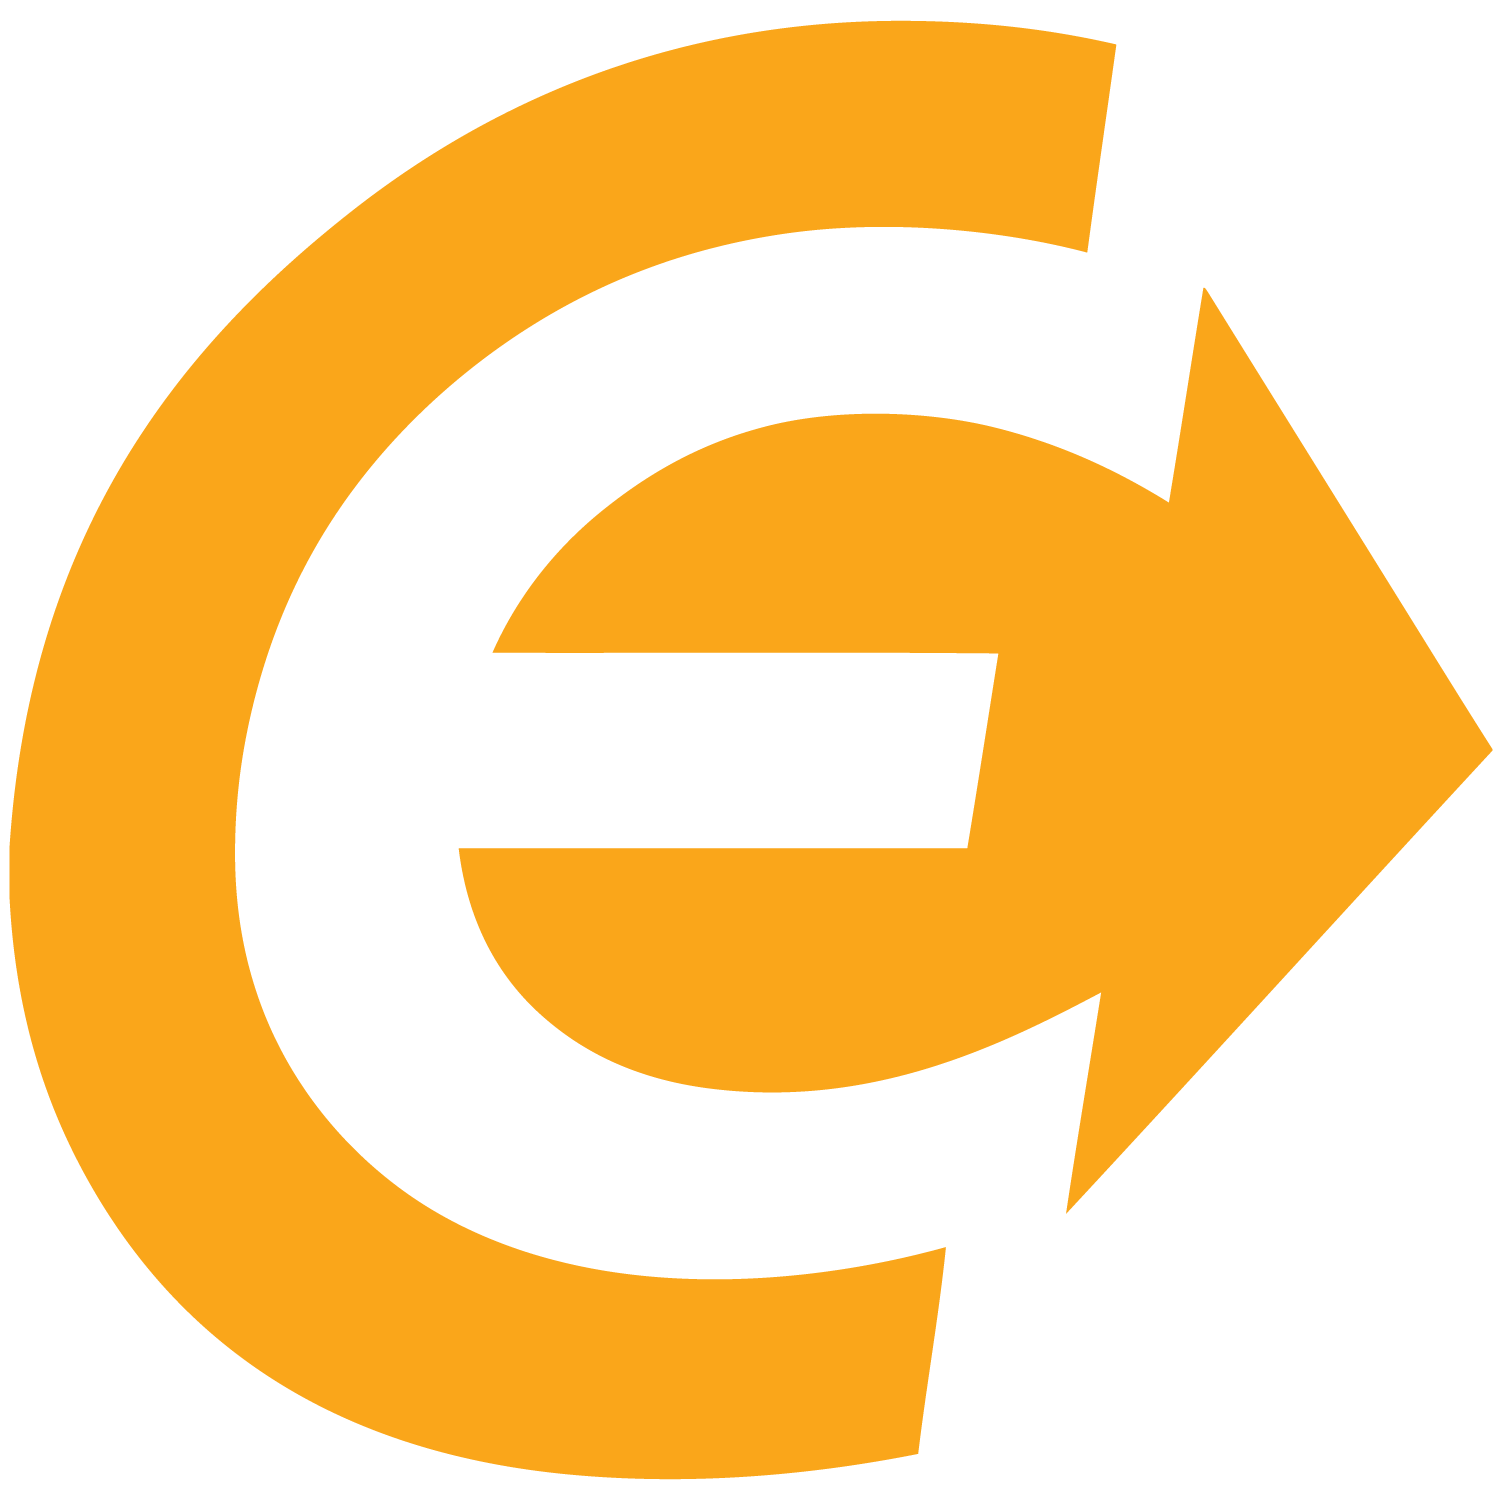 E Logo Images, Reverse Search. 